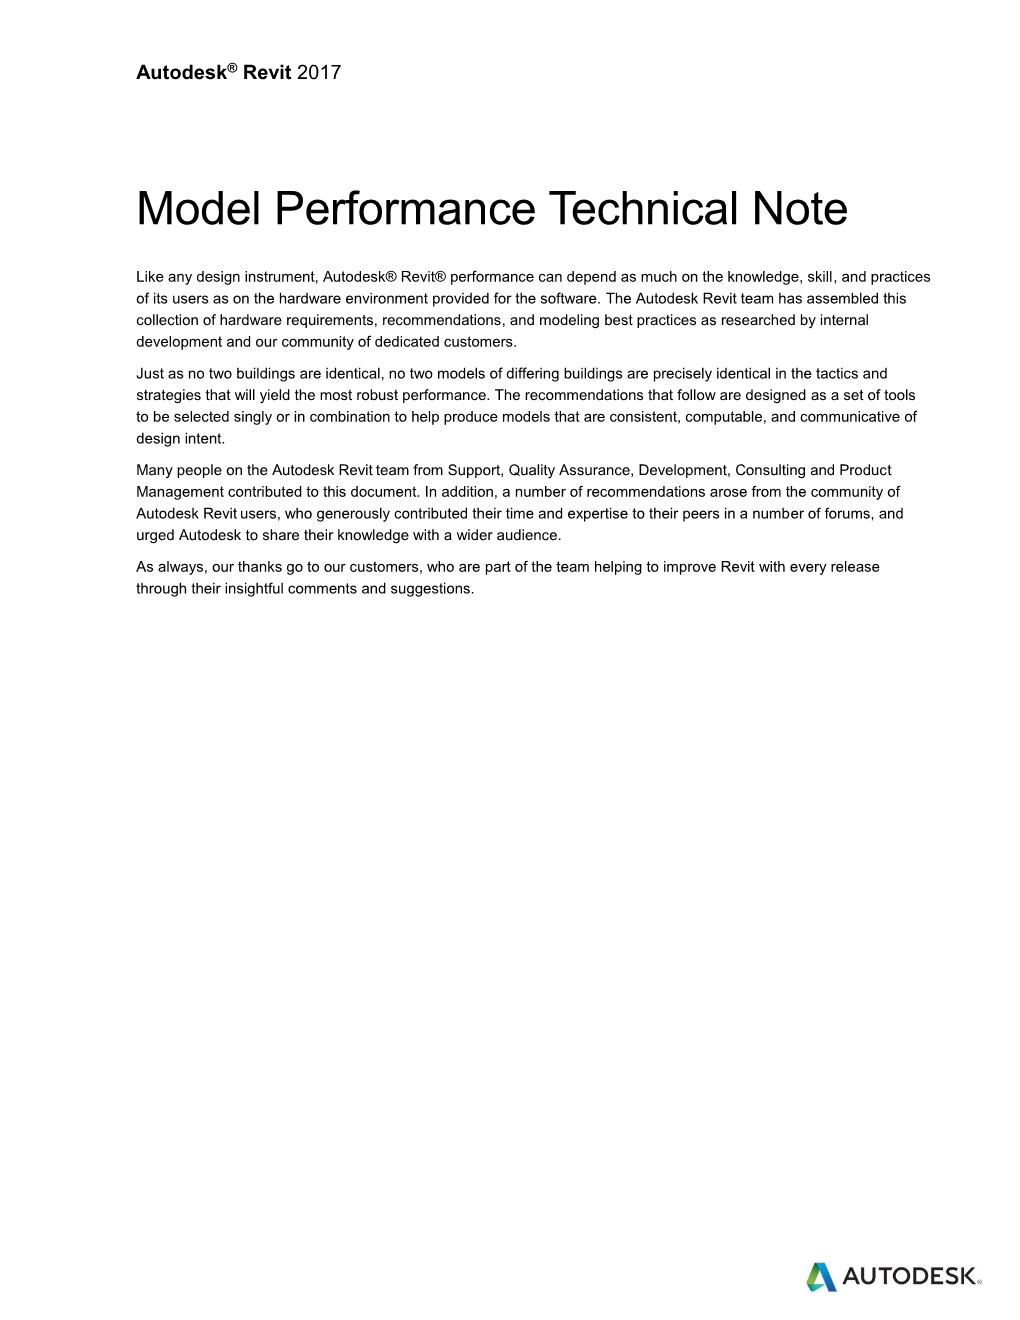 Revit Model Performance Technical Note